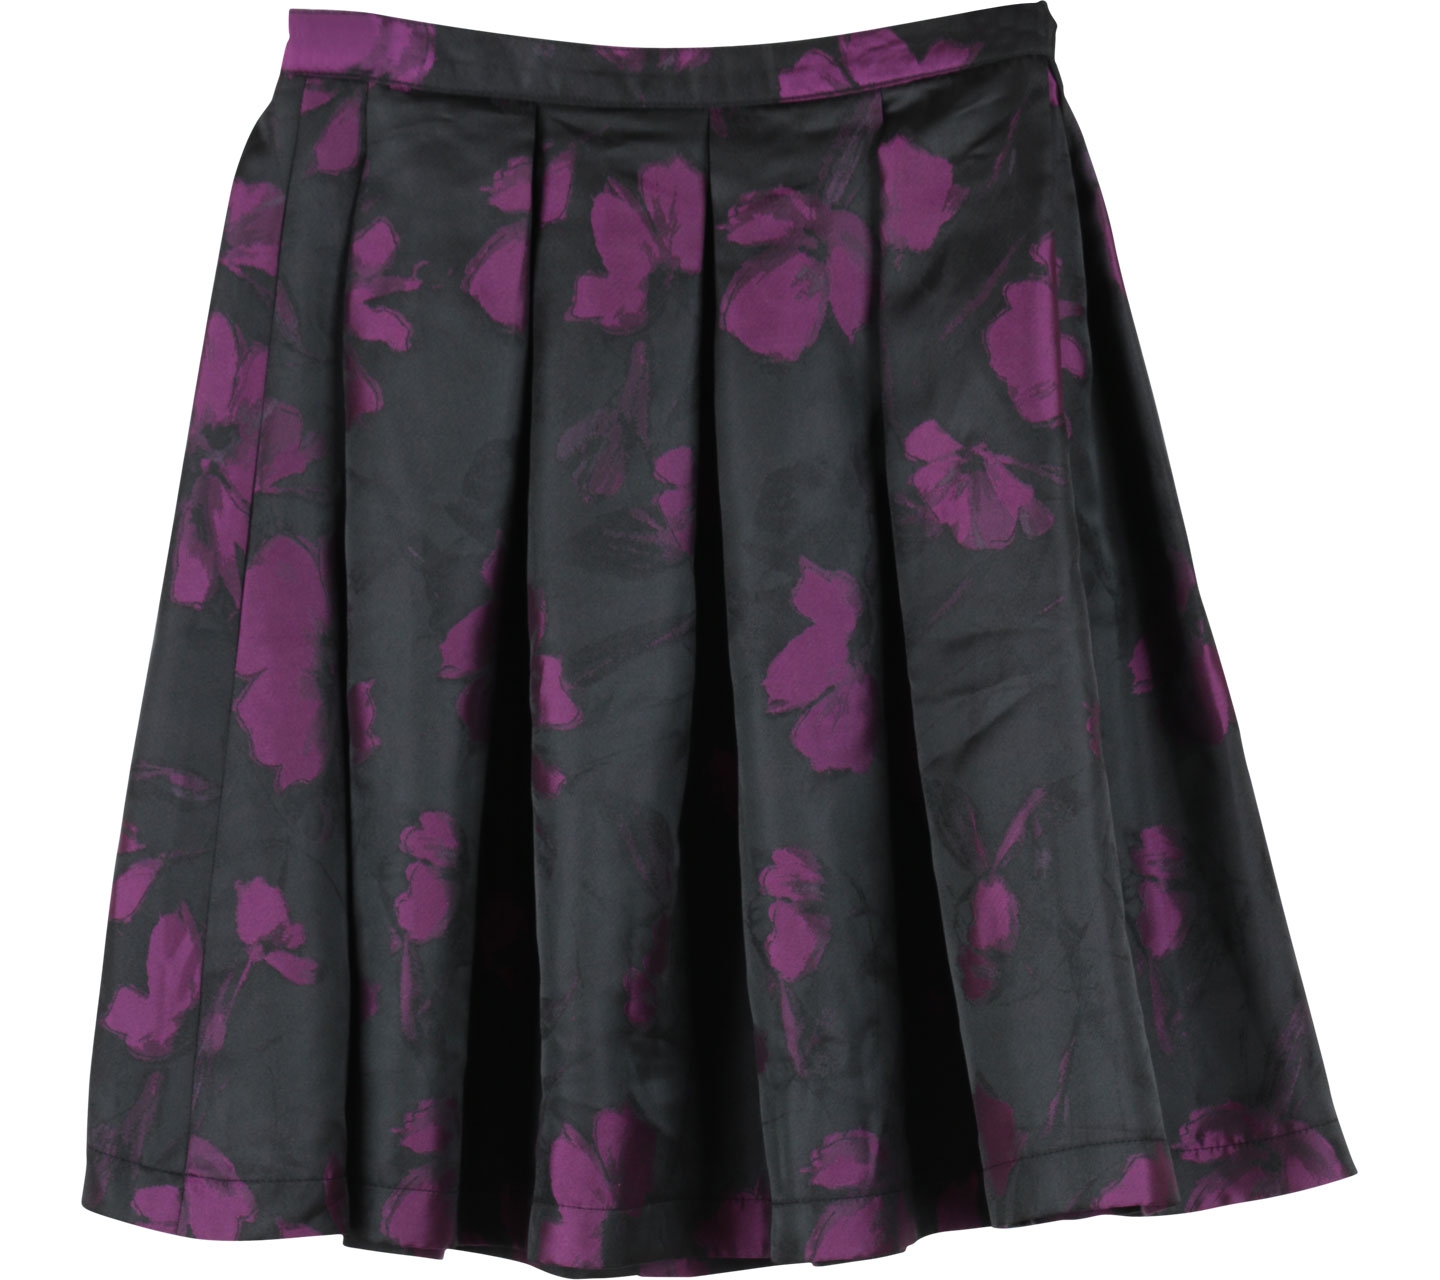 Esme Gallery Black And Purple Floral Skirt